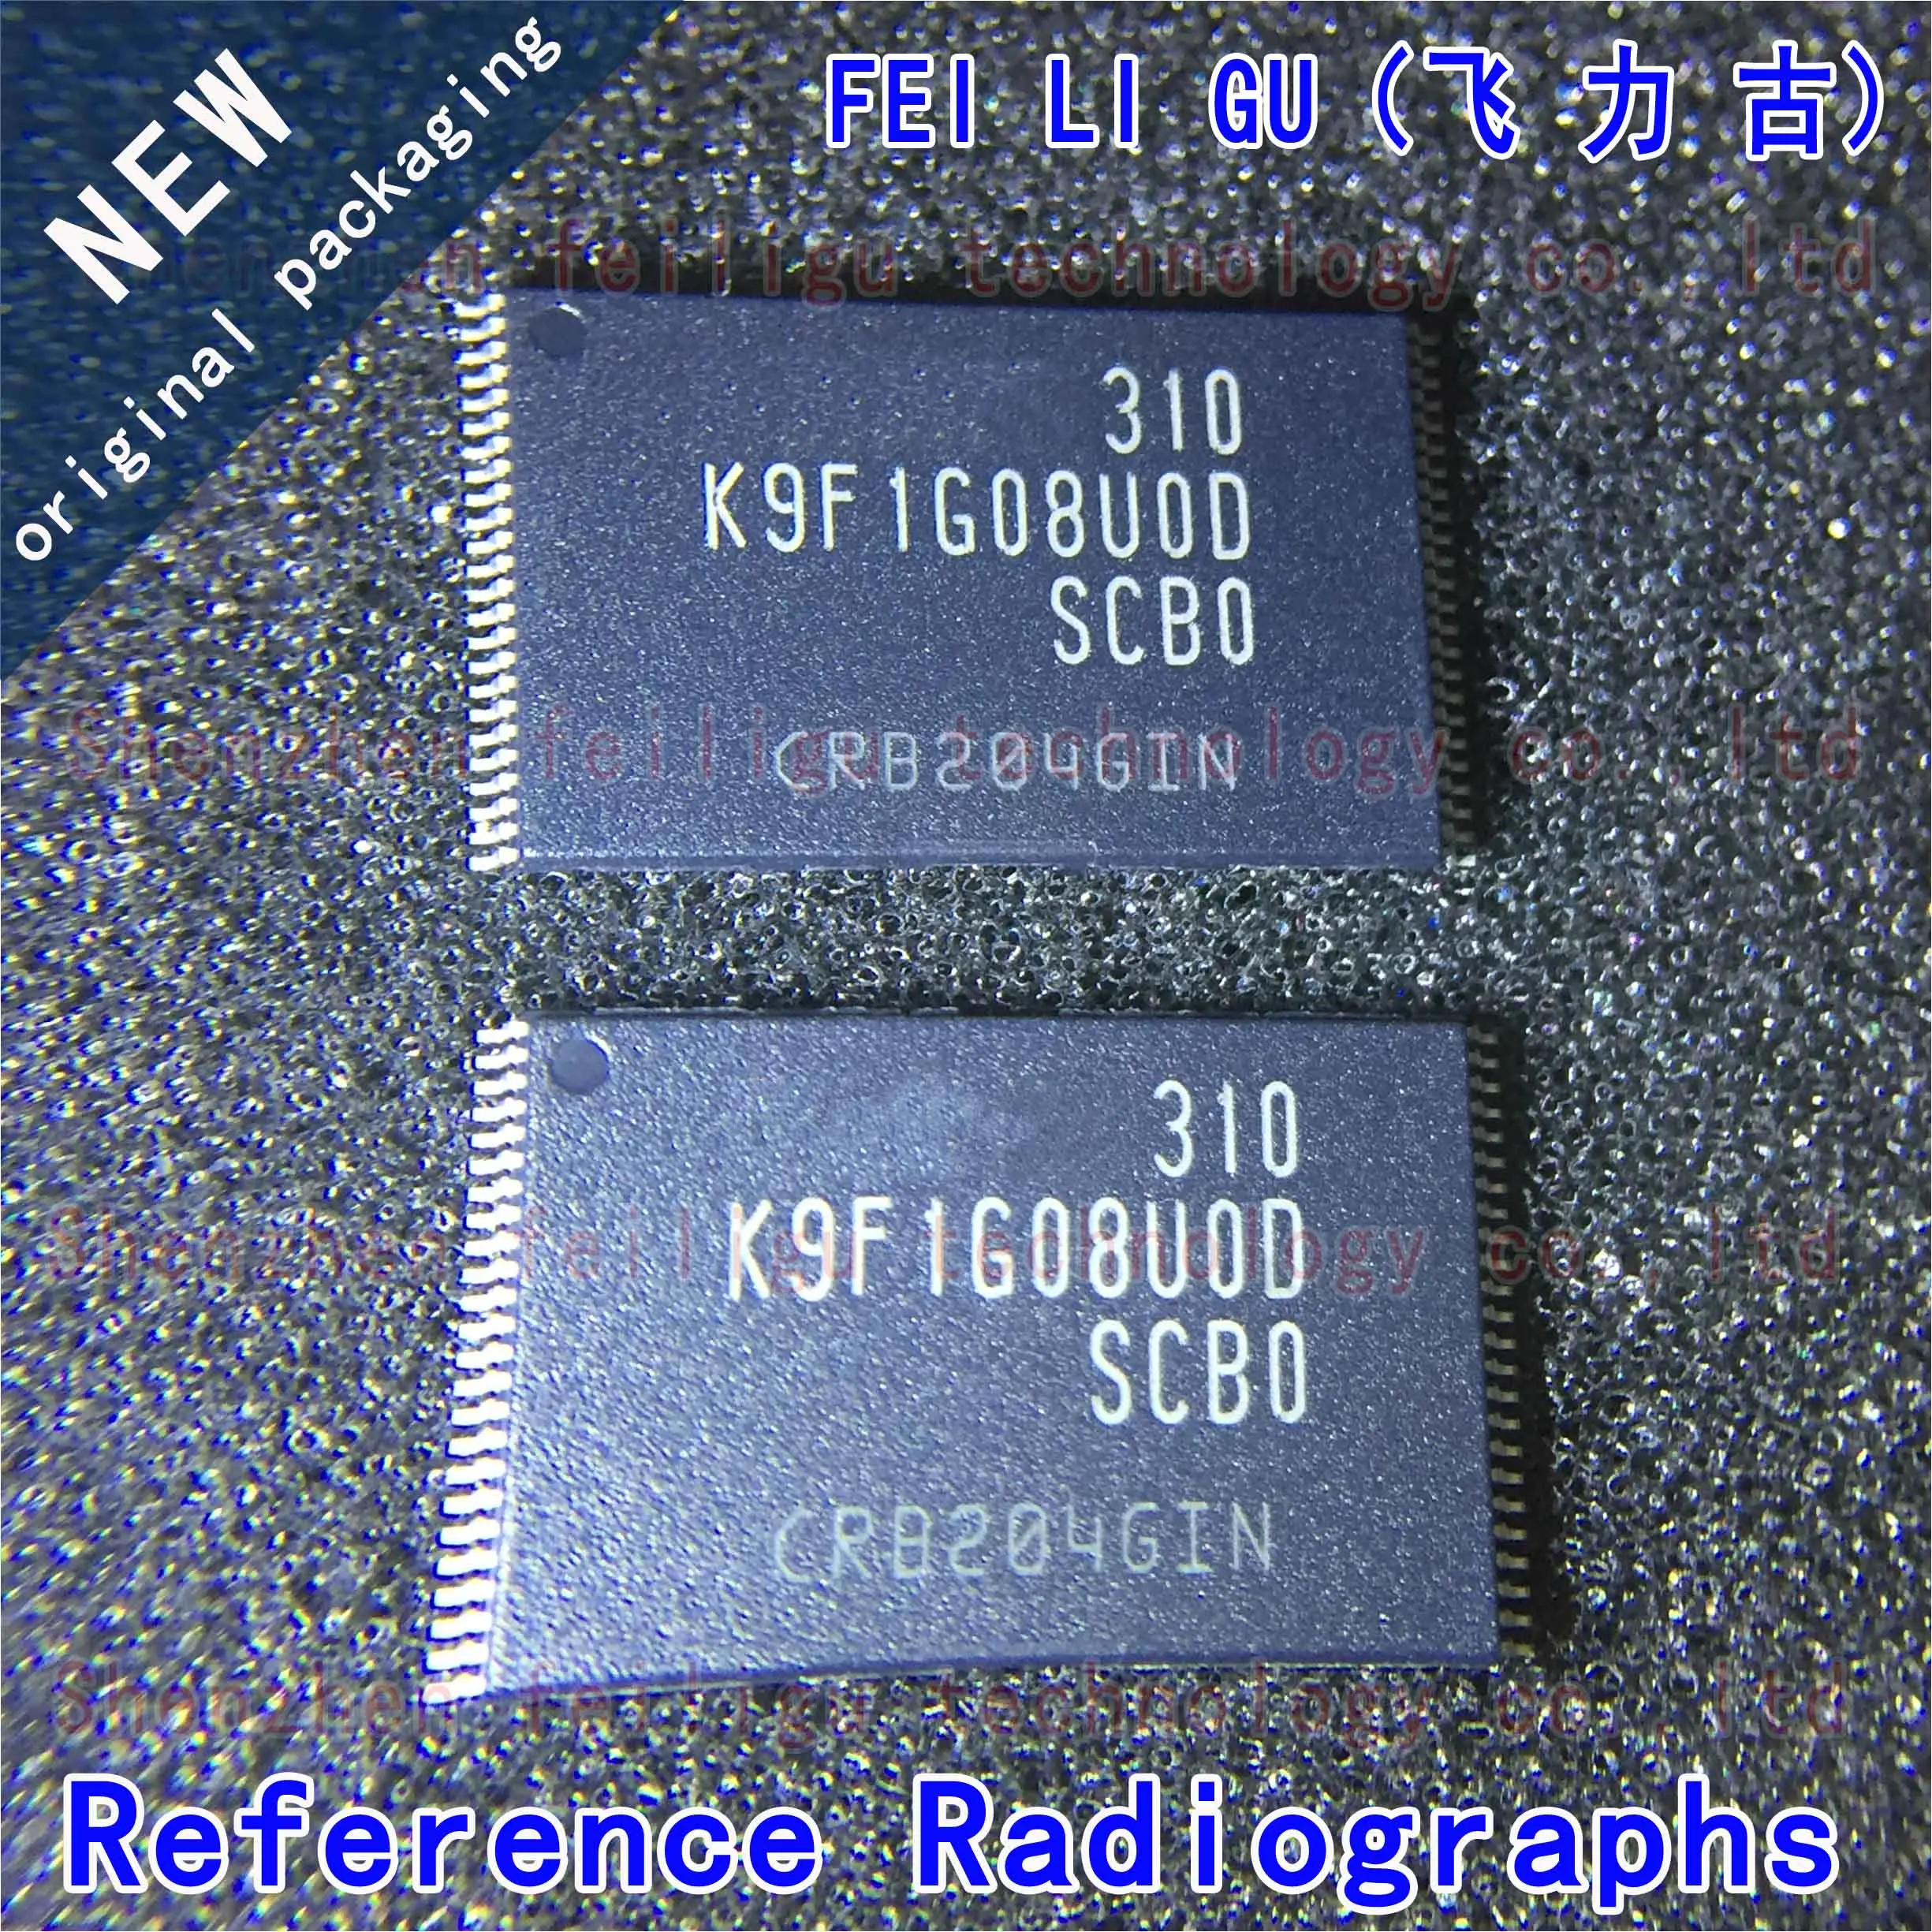 1PCS 100% New Original K9F1G08U0D-SCB0 K9F1G08U0D-SCBO Package:TSSOP48 Flash Memory Chip 10pcs k9f1g08u0c pcb0 k9f1g08u0d scb0 k9f1g08u0b pcb0 k9f1208u0b pcb0 k9f1208u0c pib0 nand flash package tsop48 100% new